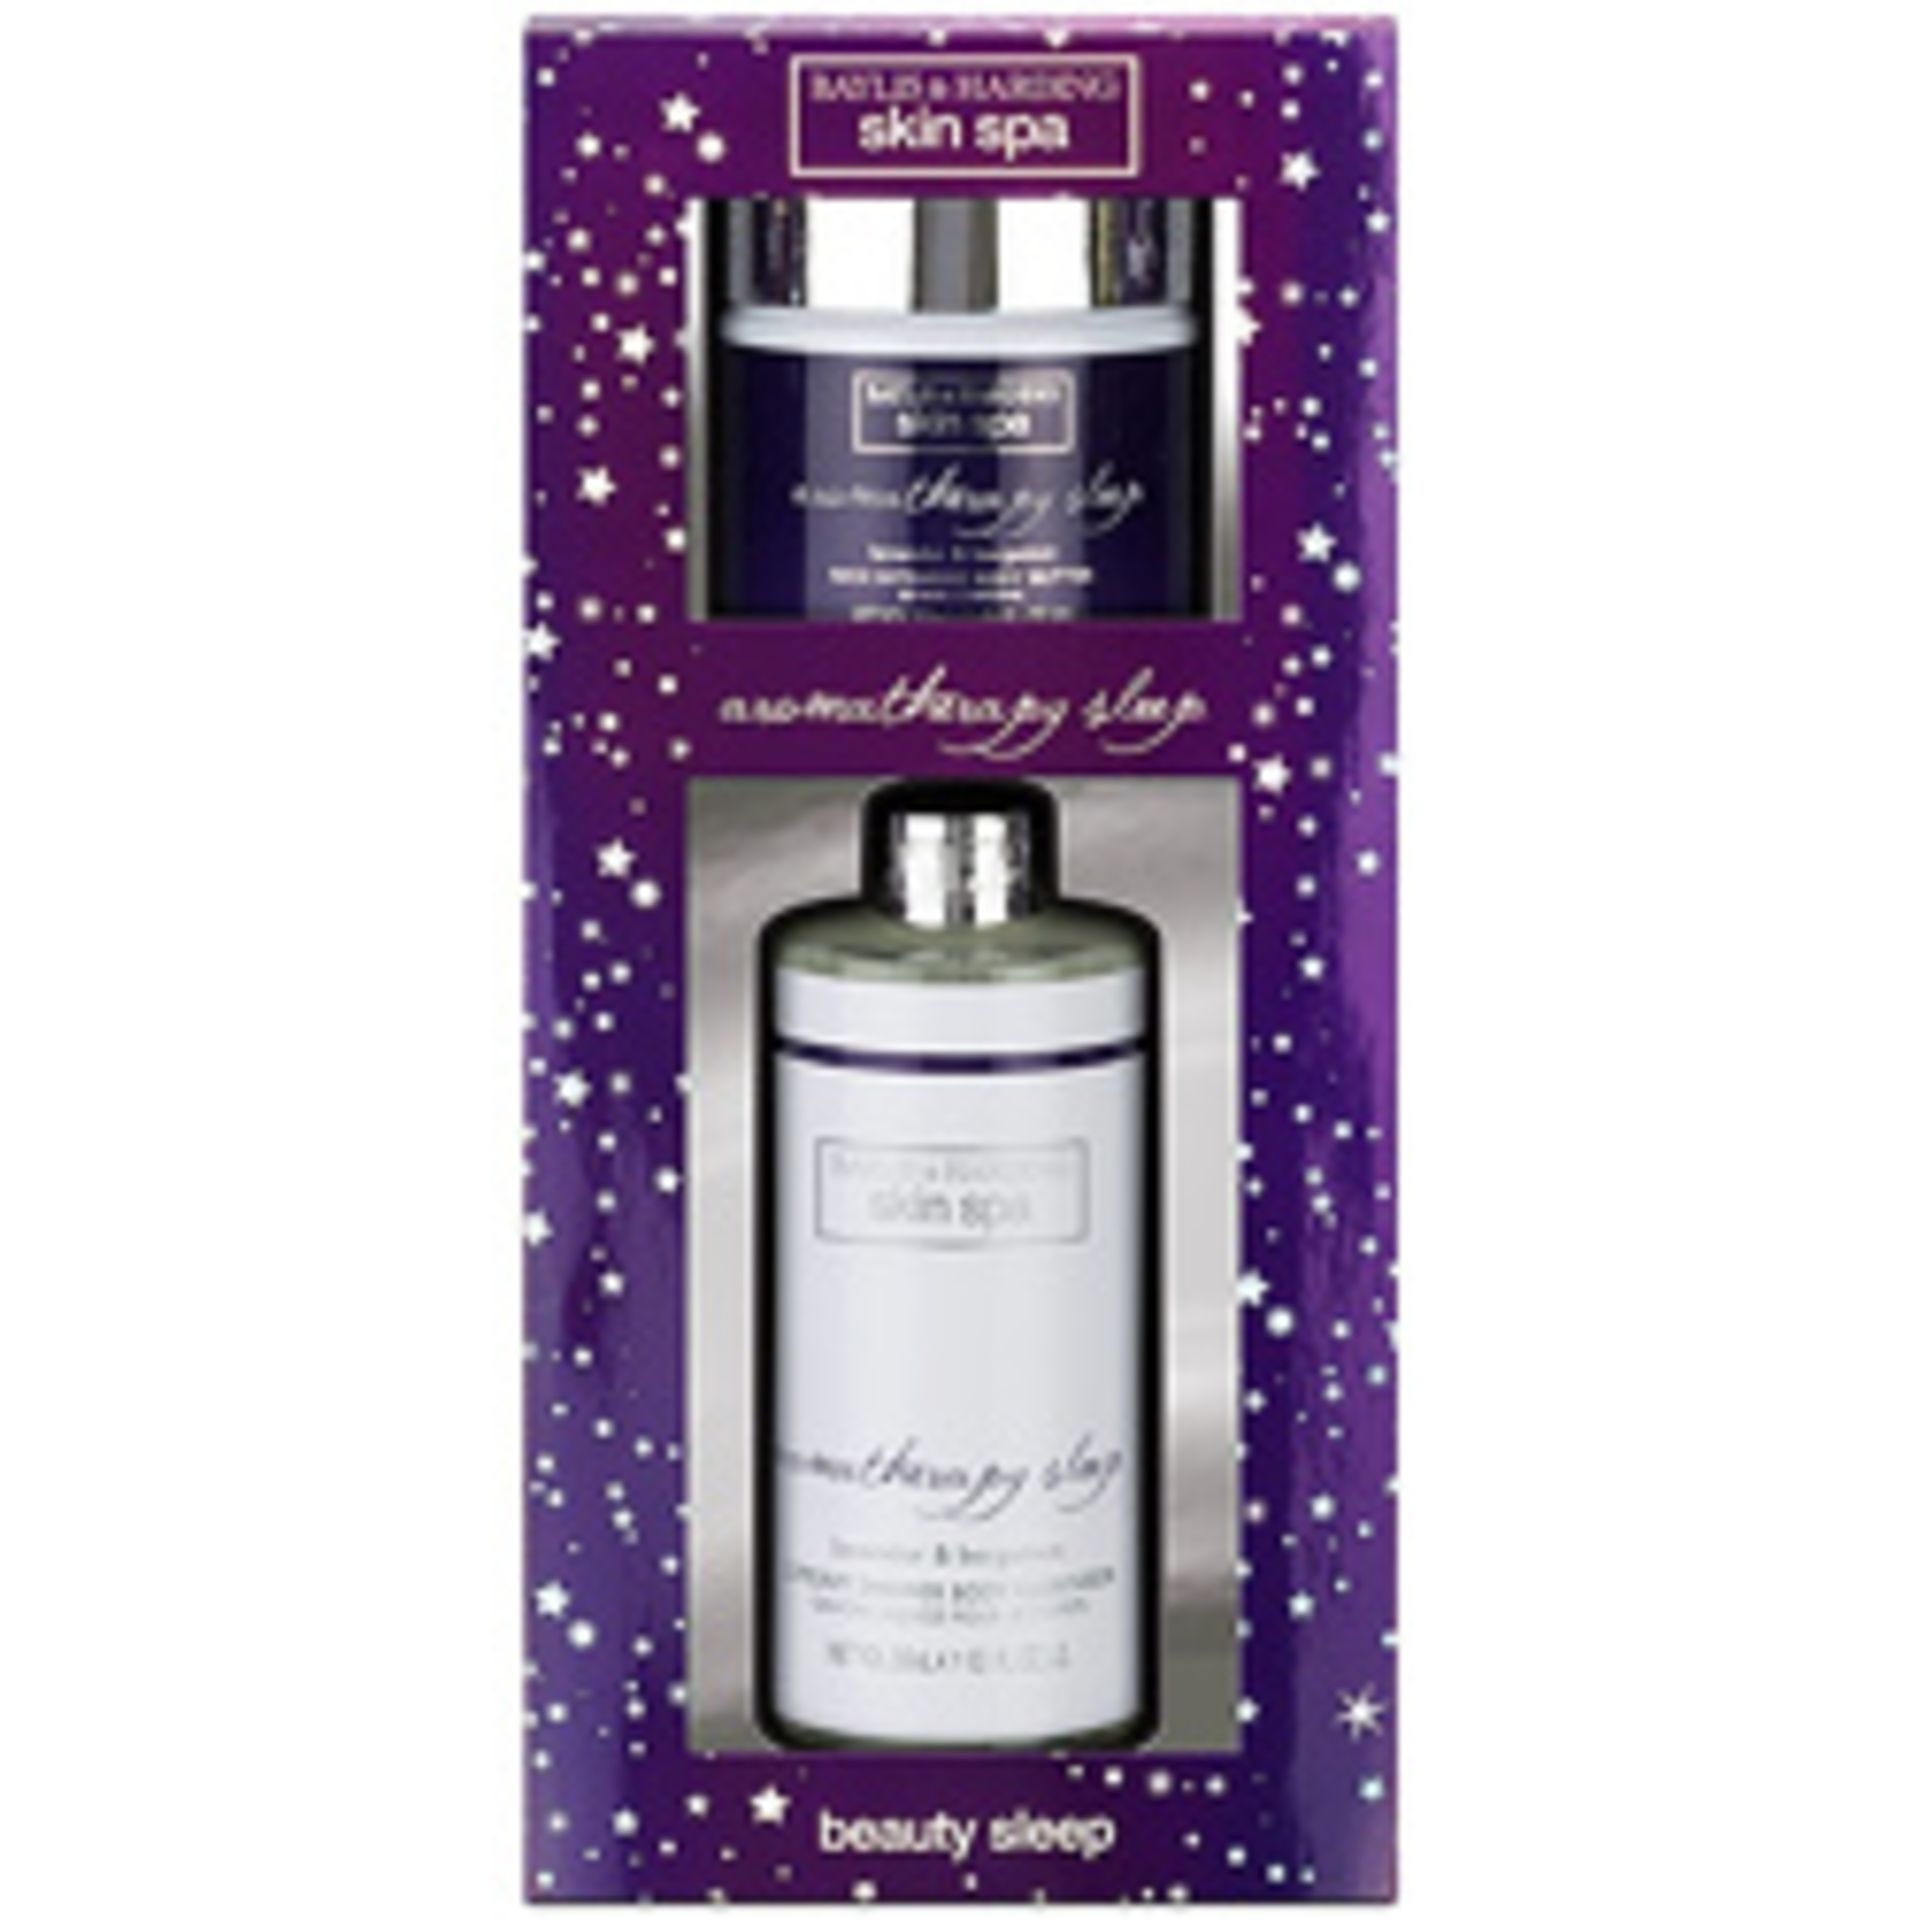 V Brand New Baylis & Harding Skin Spa Aromatherapy Sleep Gift Set RRP: £10 X  4  Bid price to be